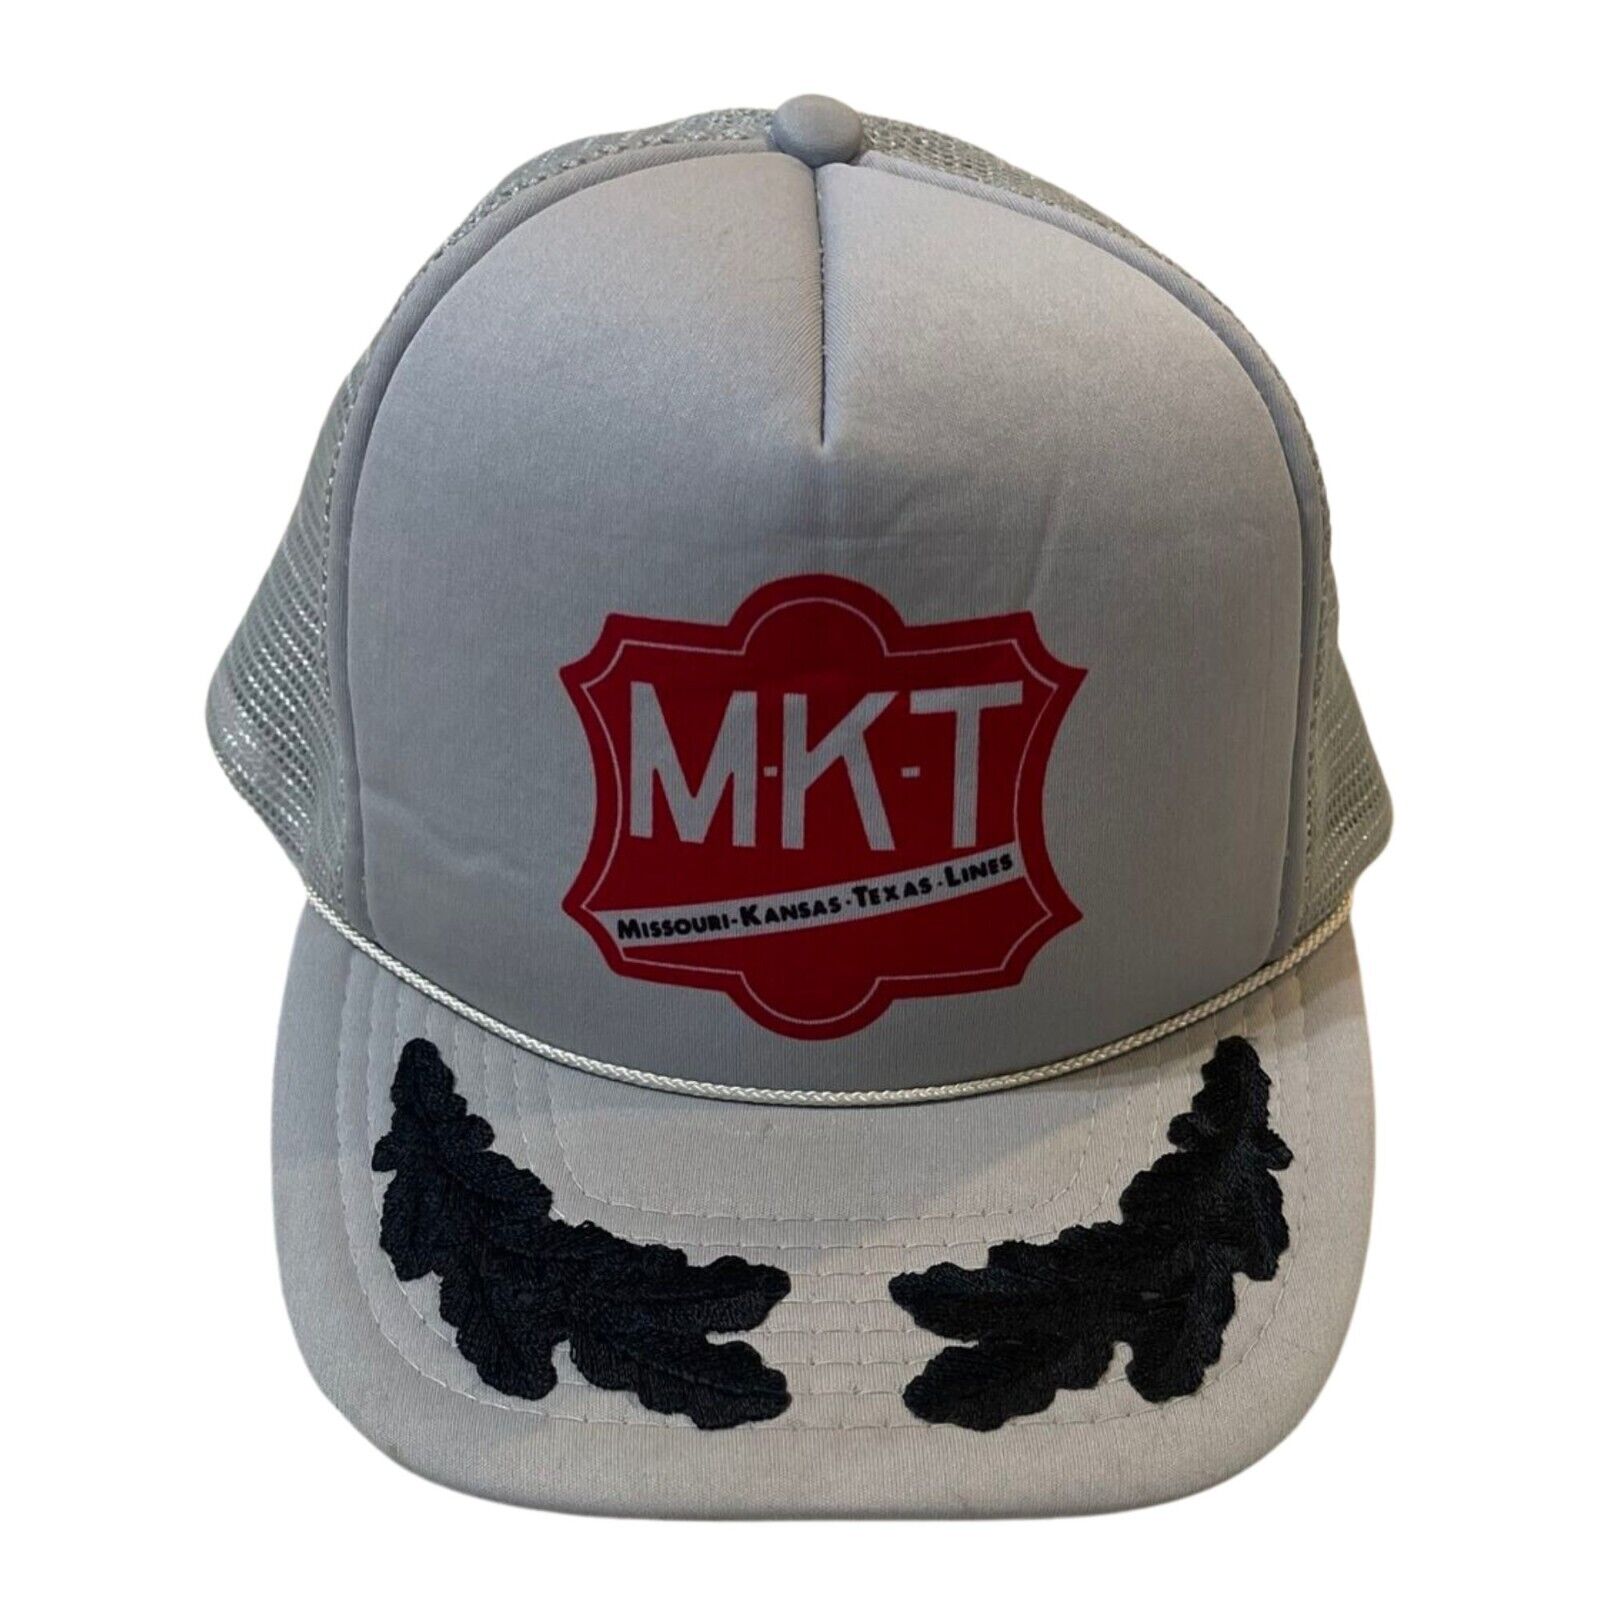 MKT Railroad Vintage Snapback Hat Missouri Kansas Texas trucker 1980’s